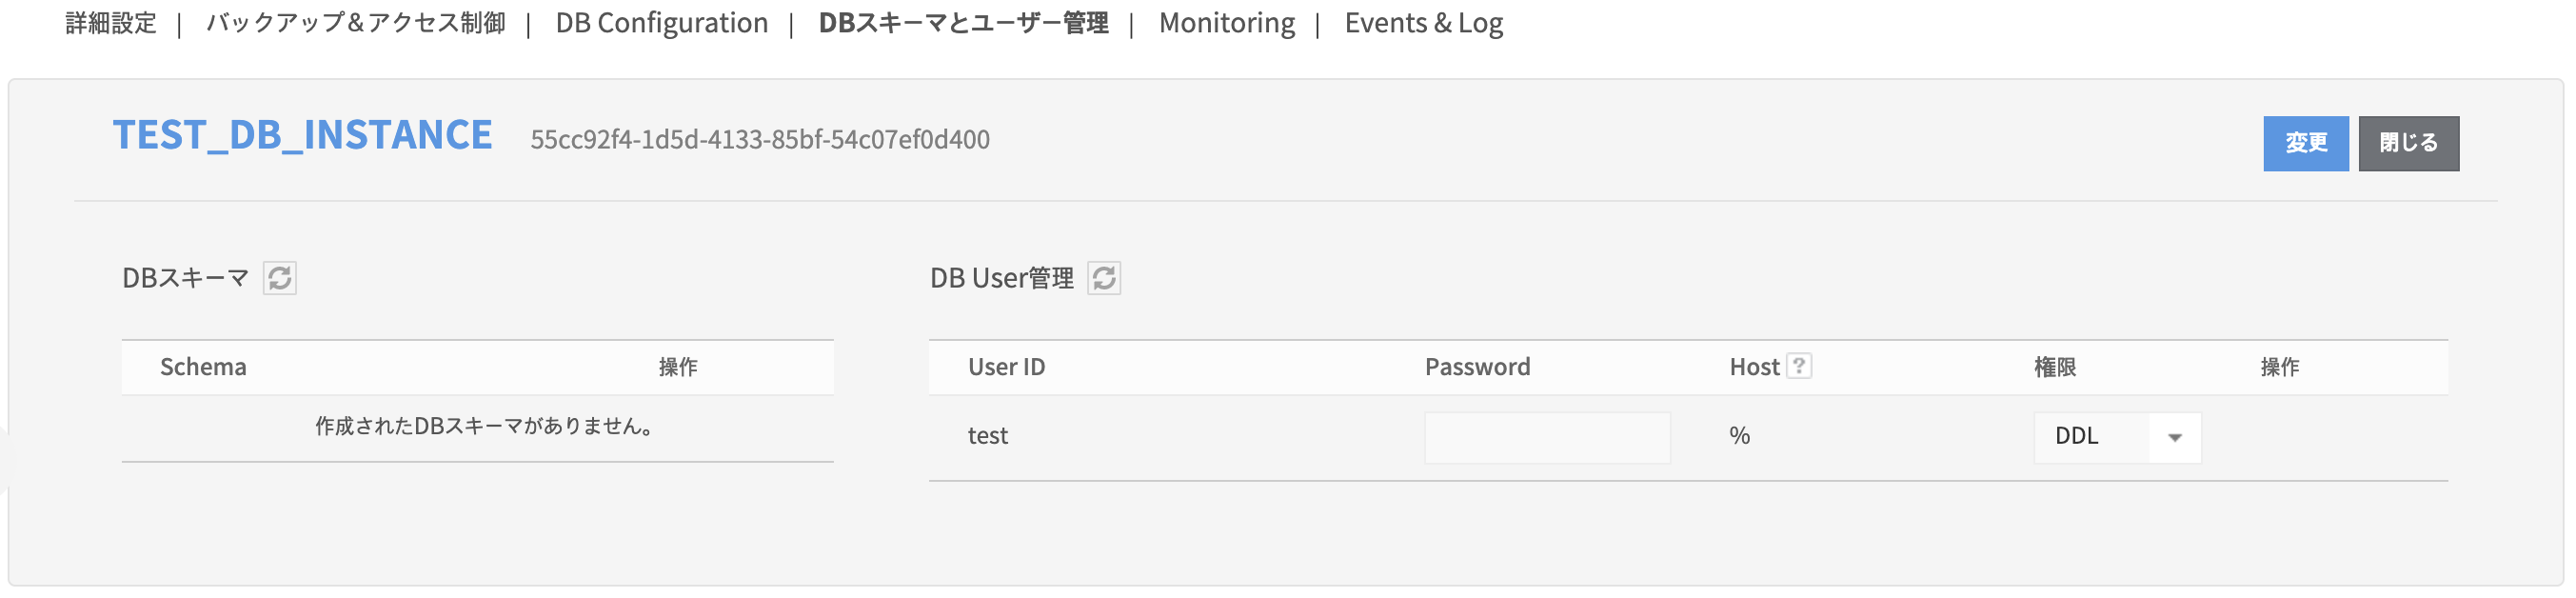 db_schema_and_user_list_20210209_jp